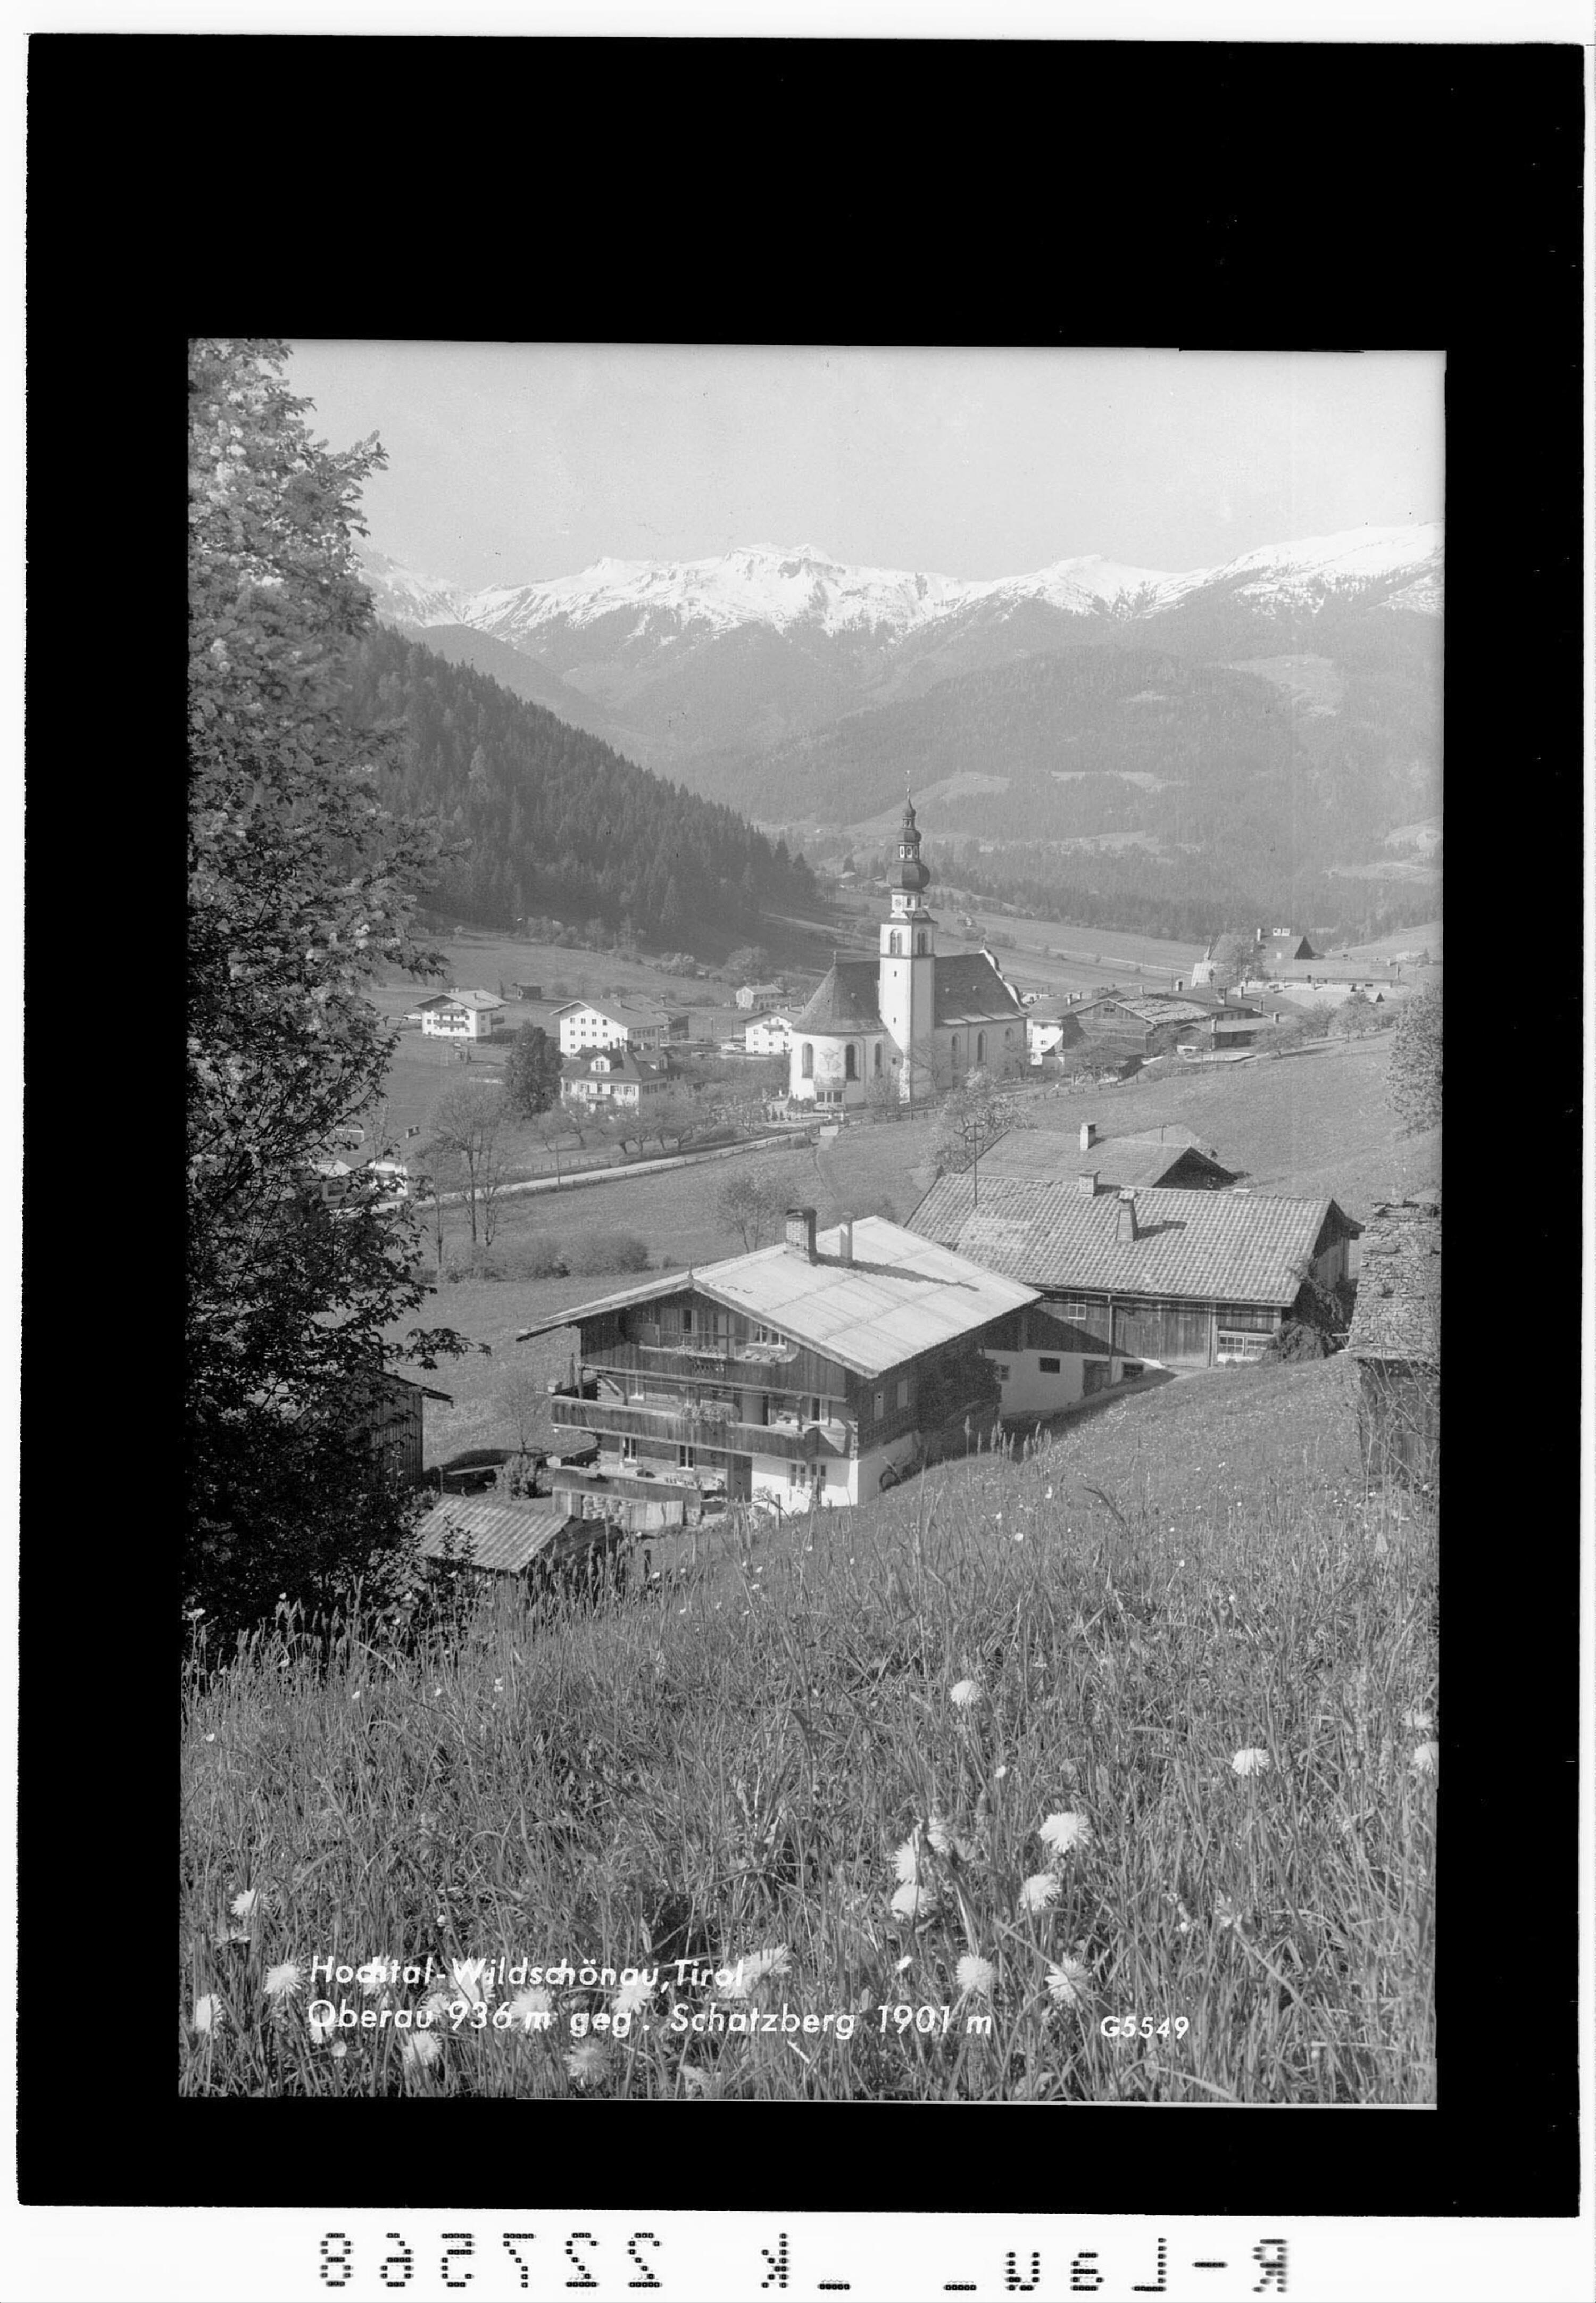 Hochtal Wildschönau / Tirol / Oberau 936 m gegen Schatzberg 1901 m></div>


    <hr>
    <div class=